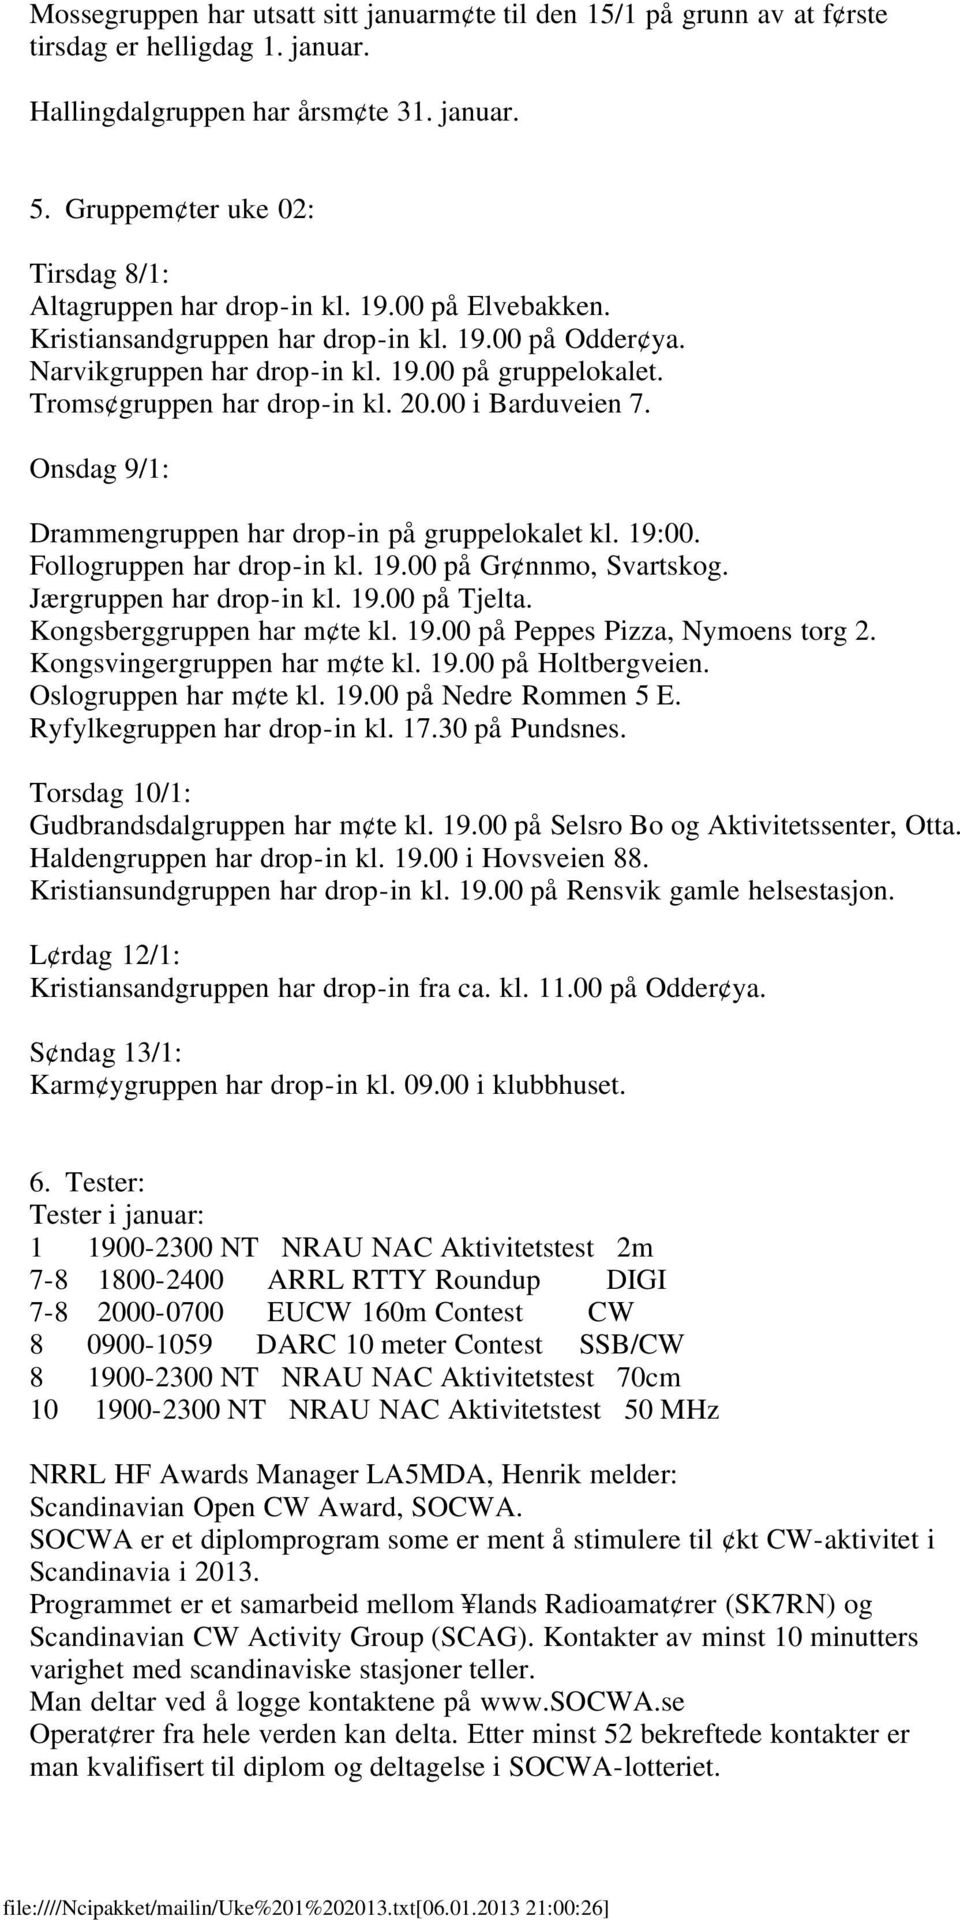 Troms gruppen har drop-in kl. 20.00 i Barduveien 7. Onsdag 9/1: Drammengruppen har drop-in på gruppelokalet kl. 19:00. Follogruppen har drop-in kl. 19.00 på Gr nnmo, Svartskog.